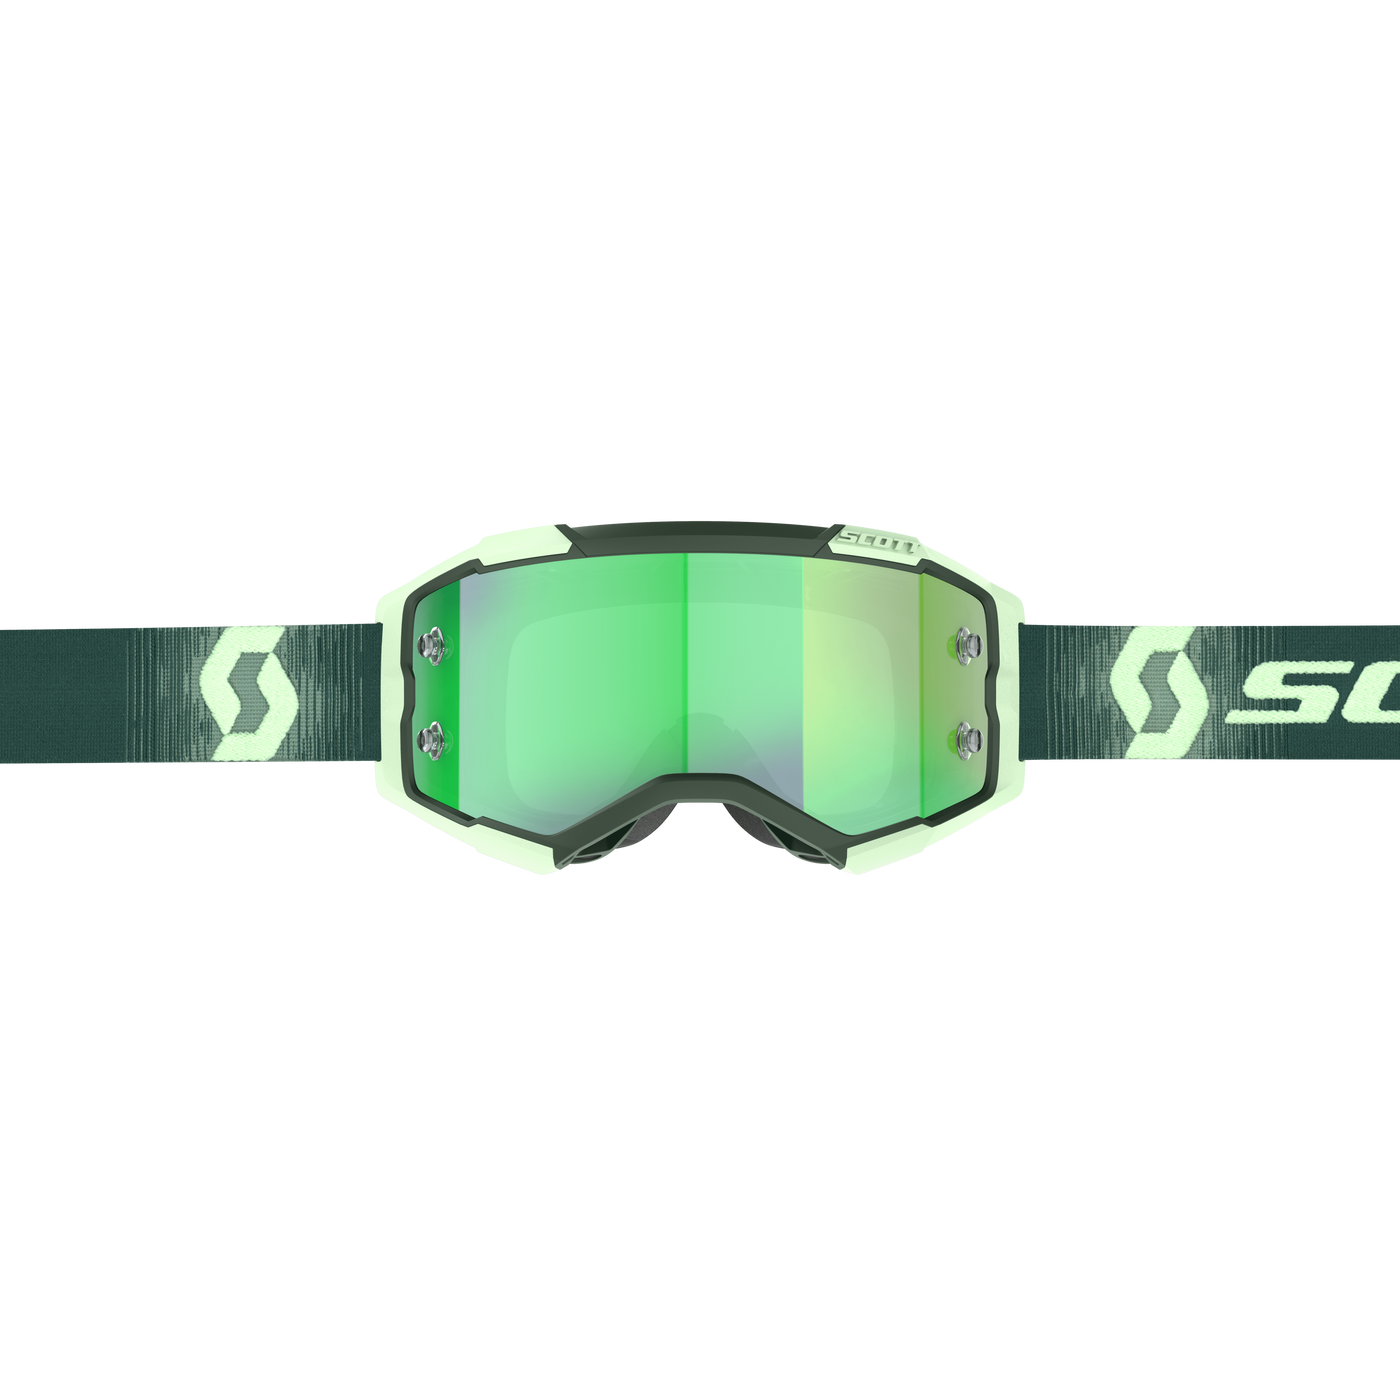 Scott Fury Goggles, Dark Green / Mint Green - Green Chrome Works Lens